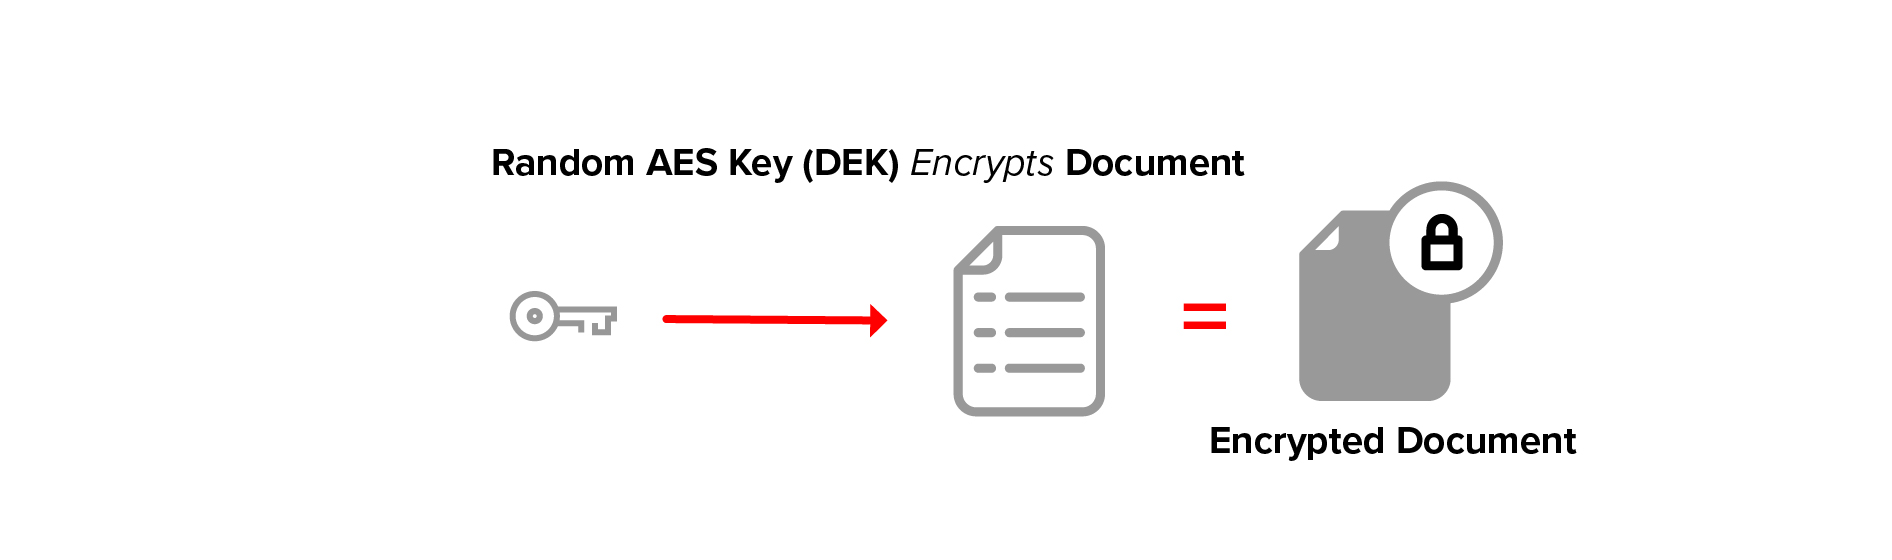 Random AES Key (DEK) encrypts document